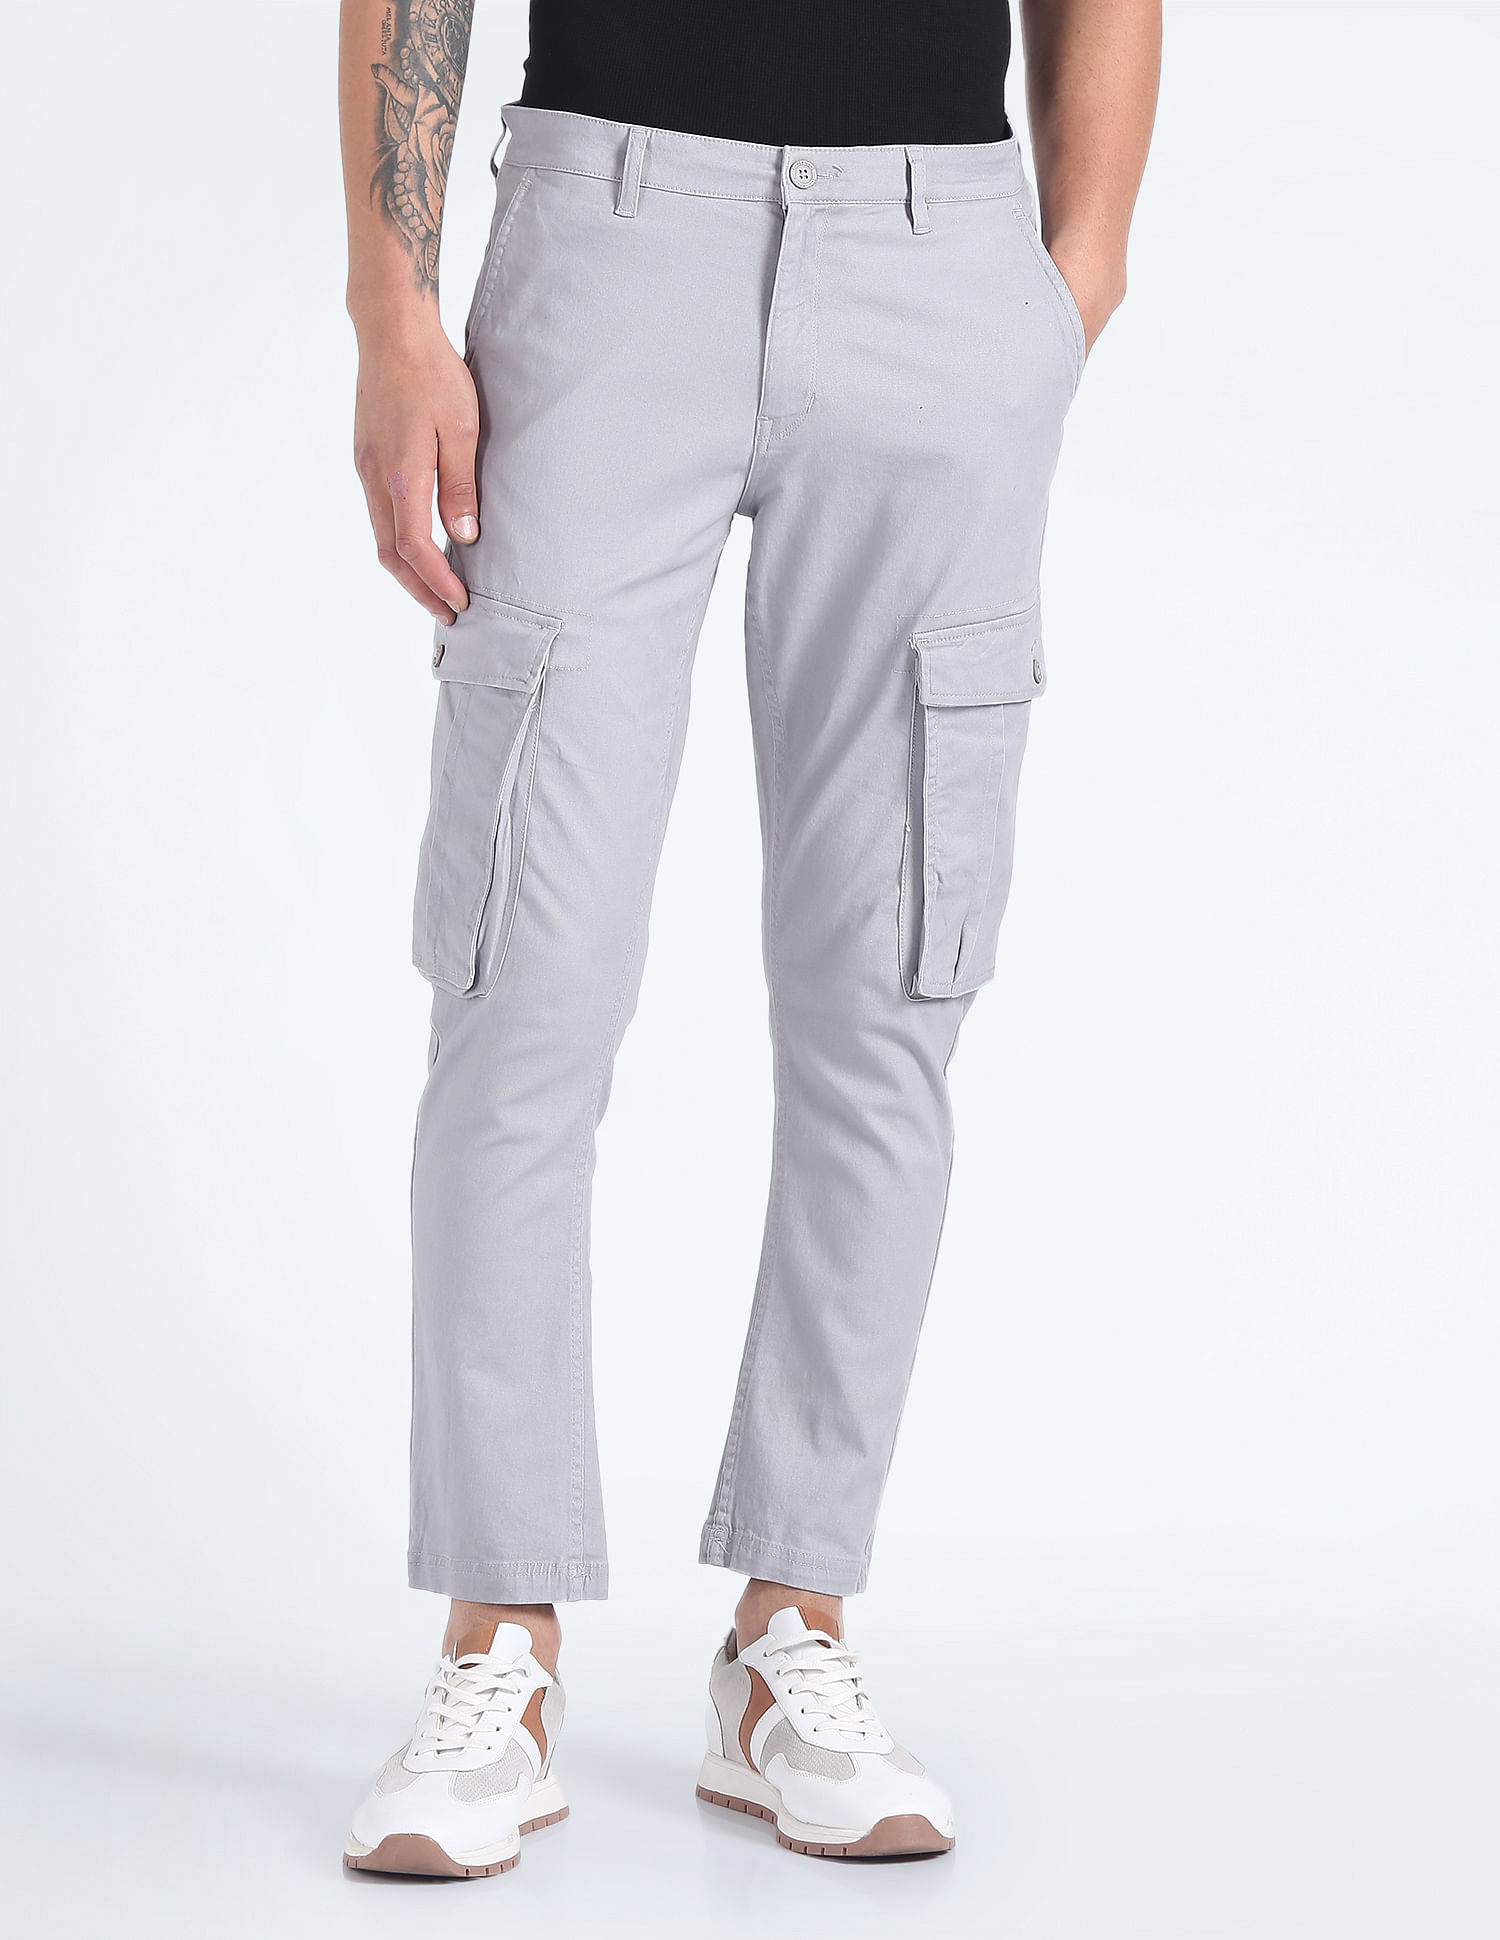 Khaki Solid Full Length Casual Men Slim Fit Jeans - Selling Fast at  Pantaloons.com